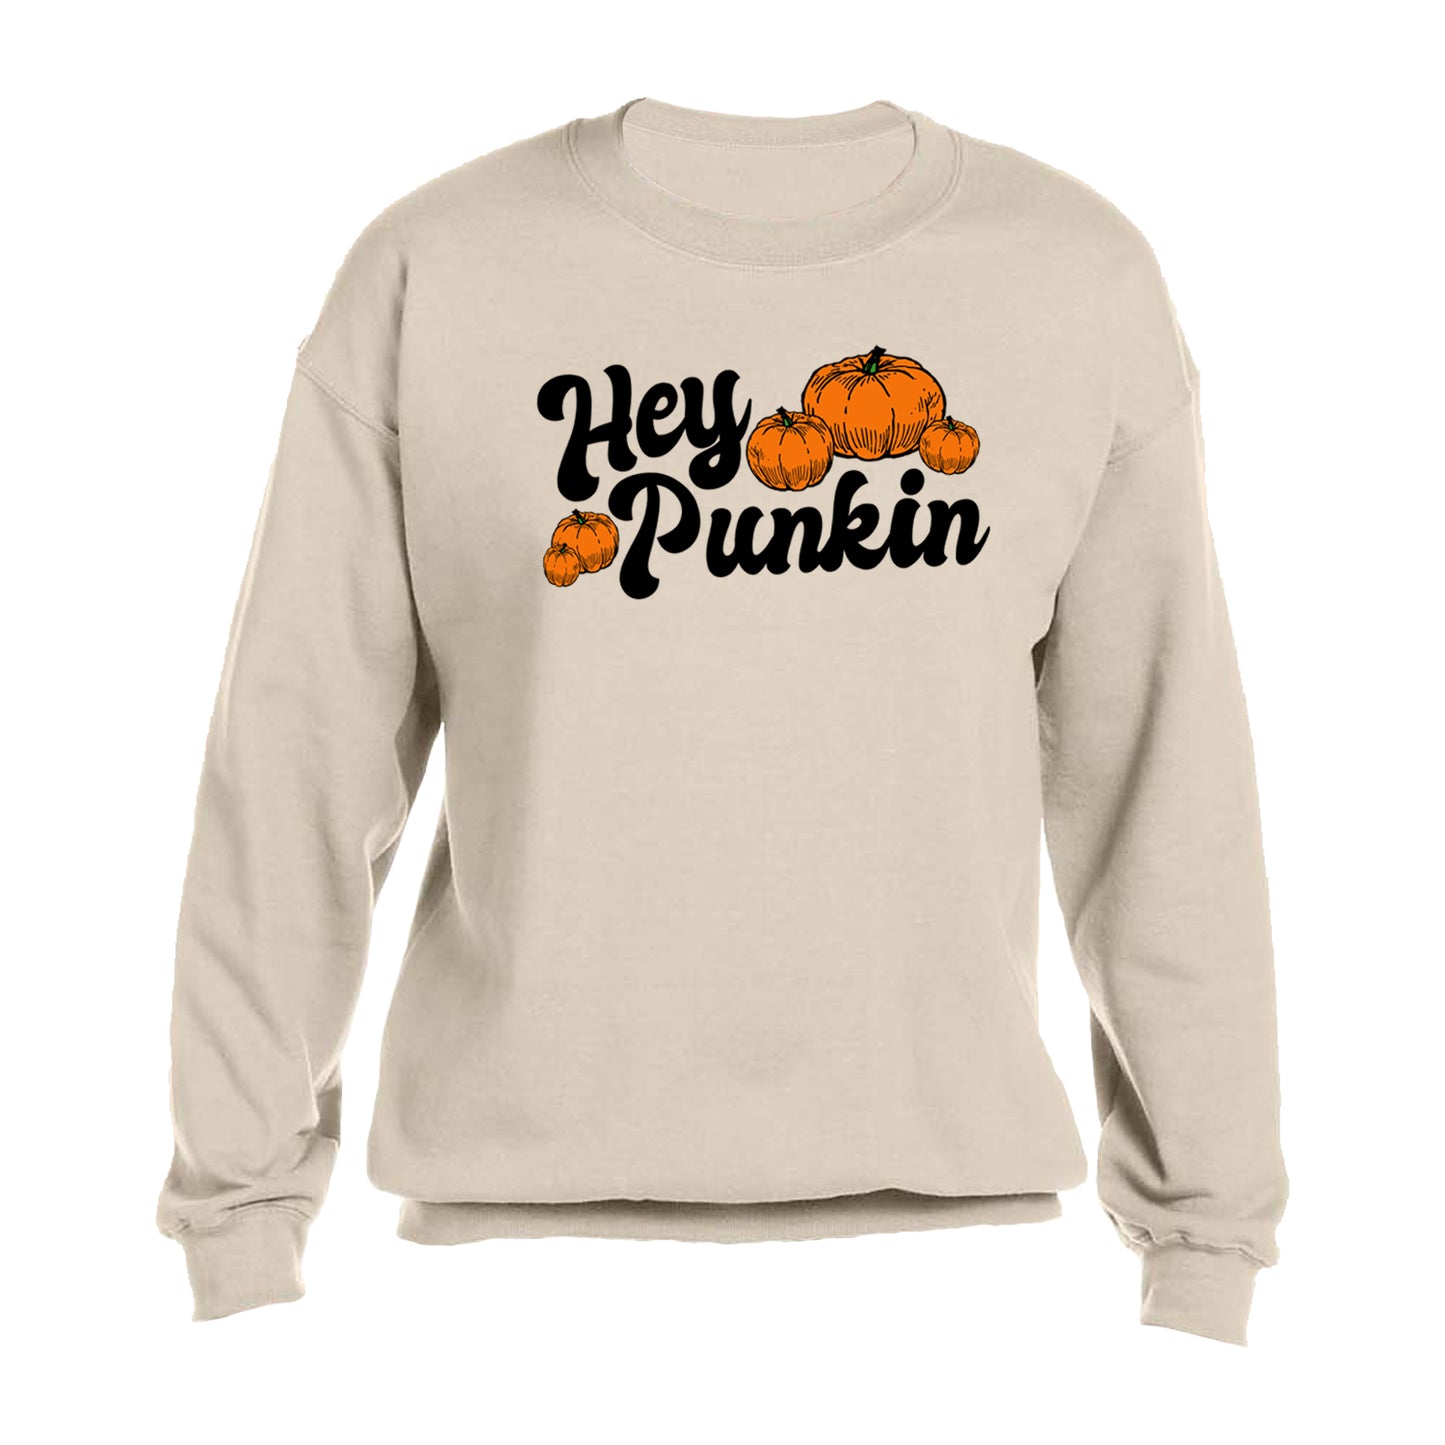 "Hey Punkin" - Sweatshirt